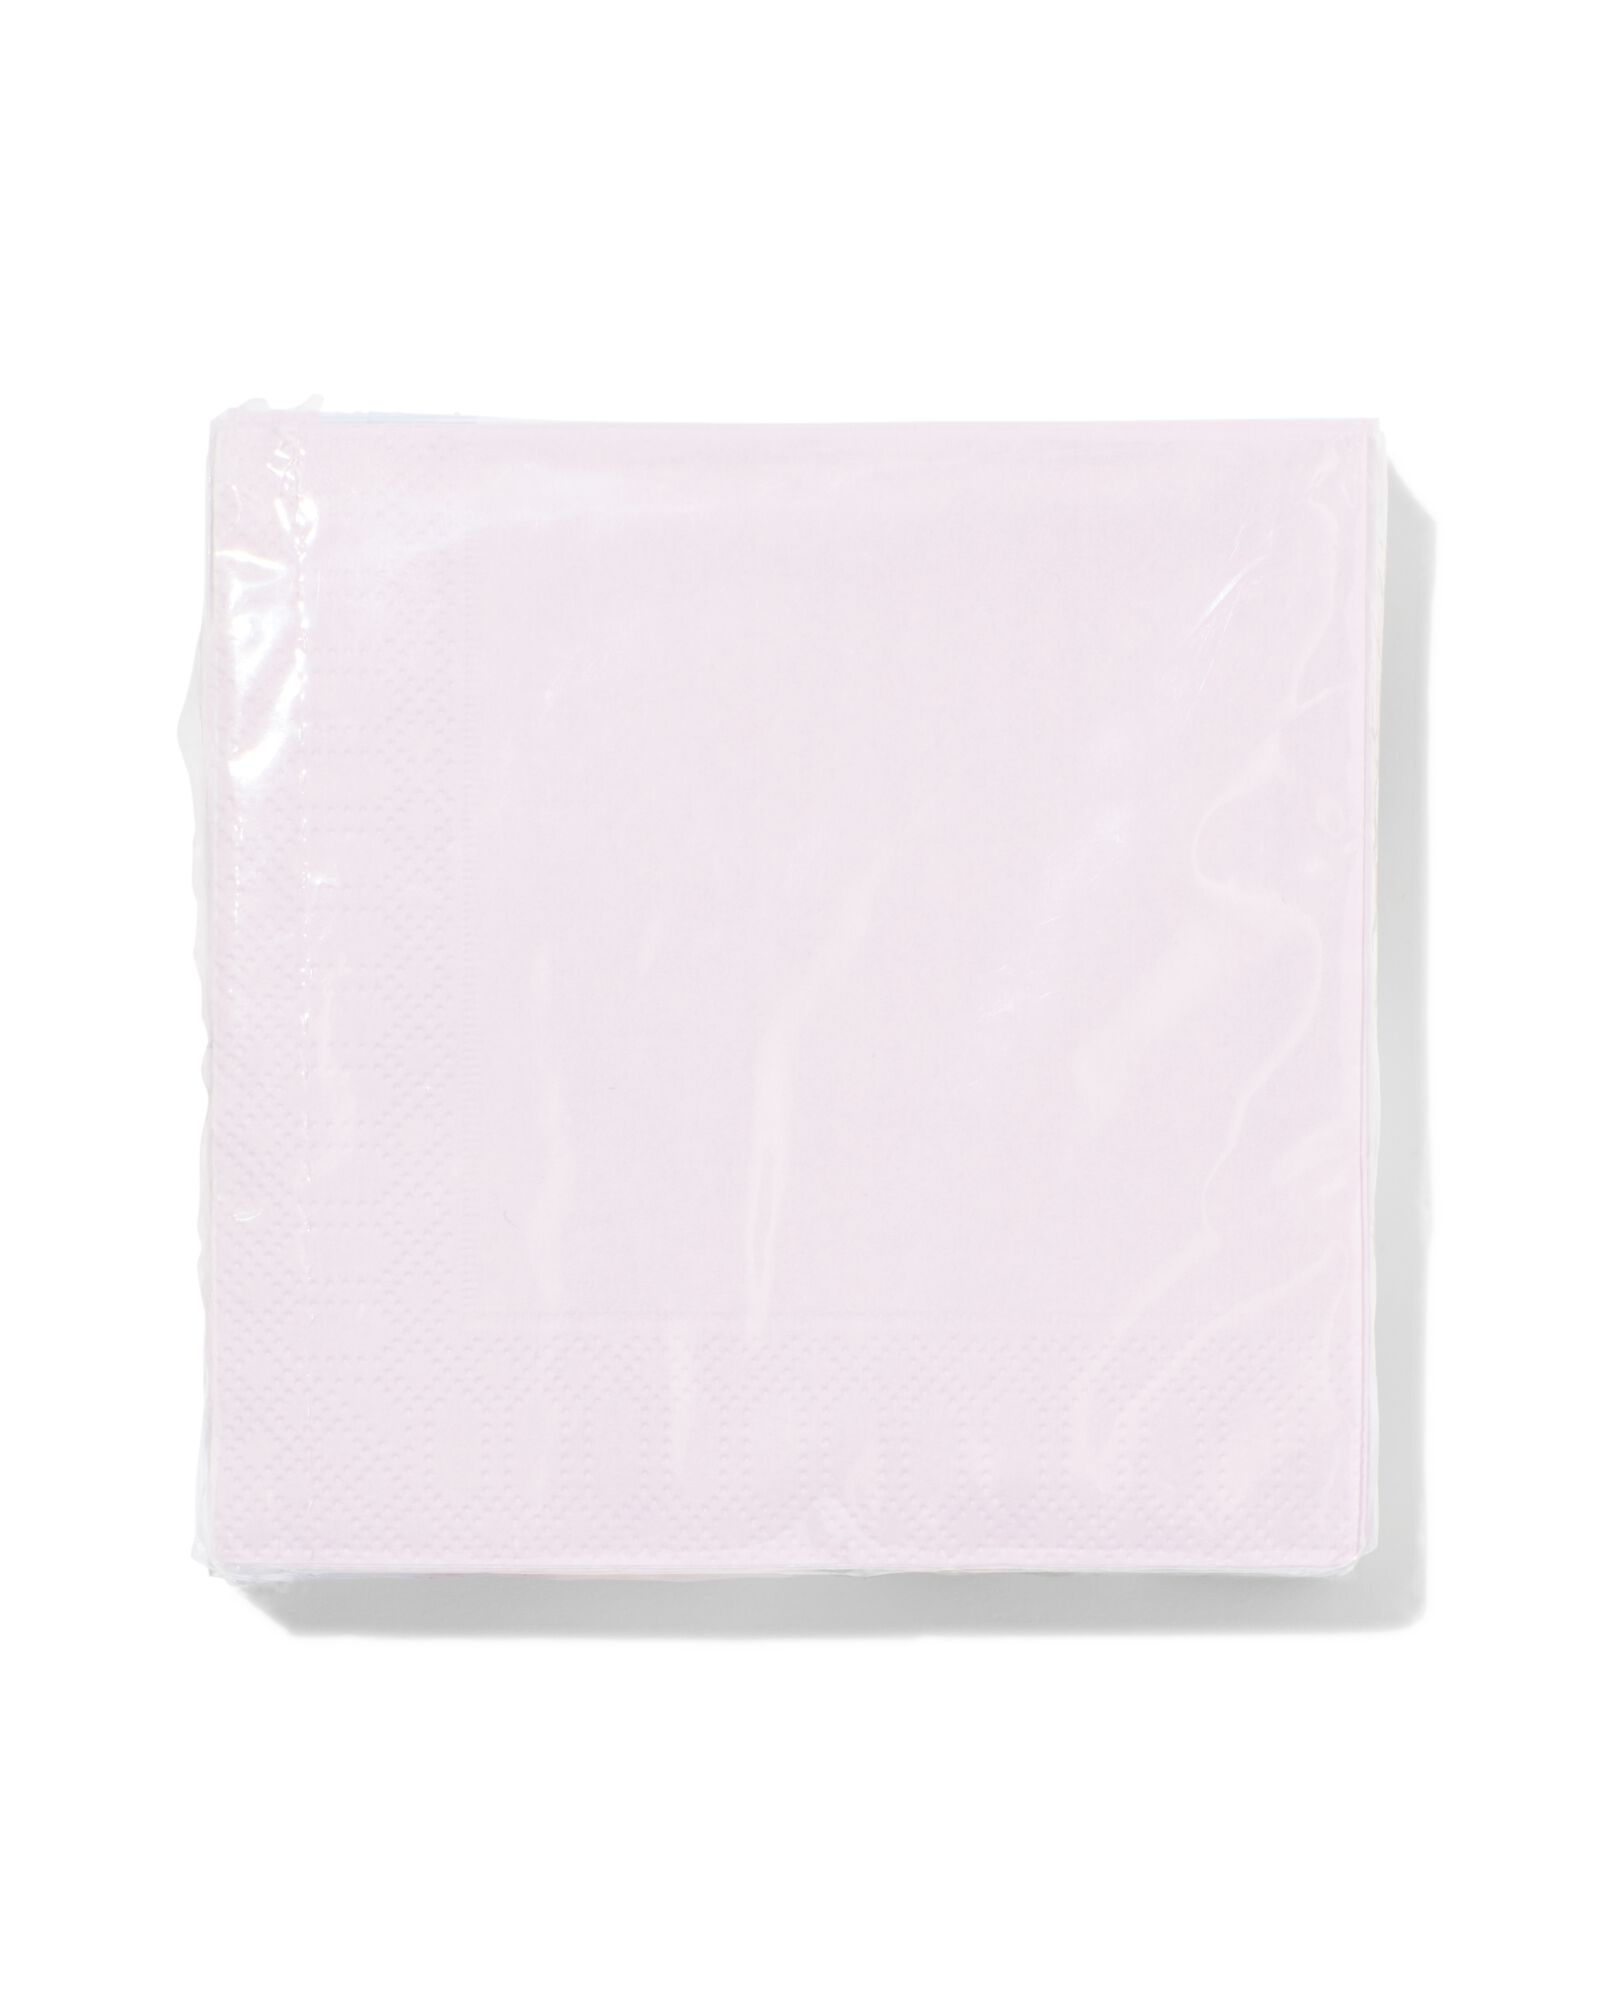 20 serviettes en papier 24x24 lilas - 14220001 - HEMA